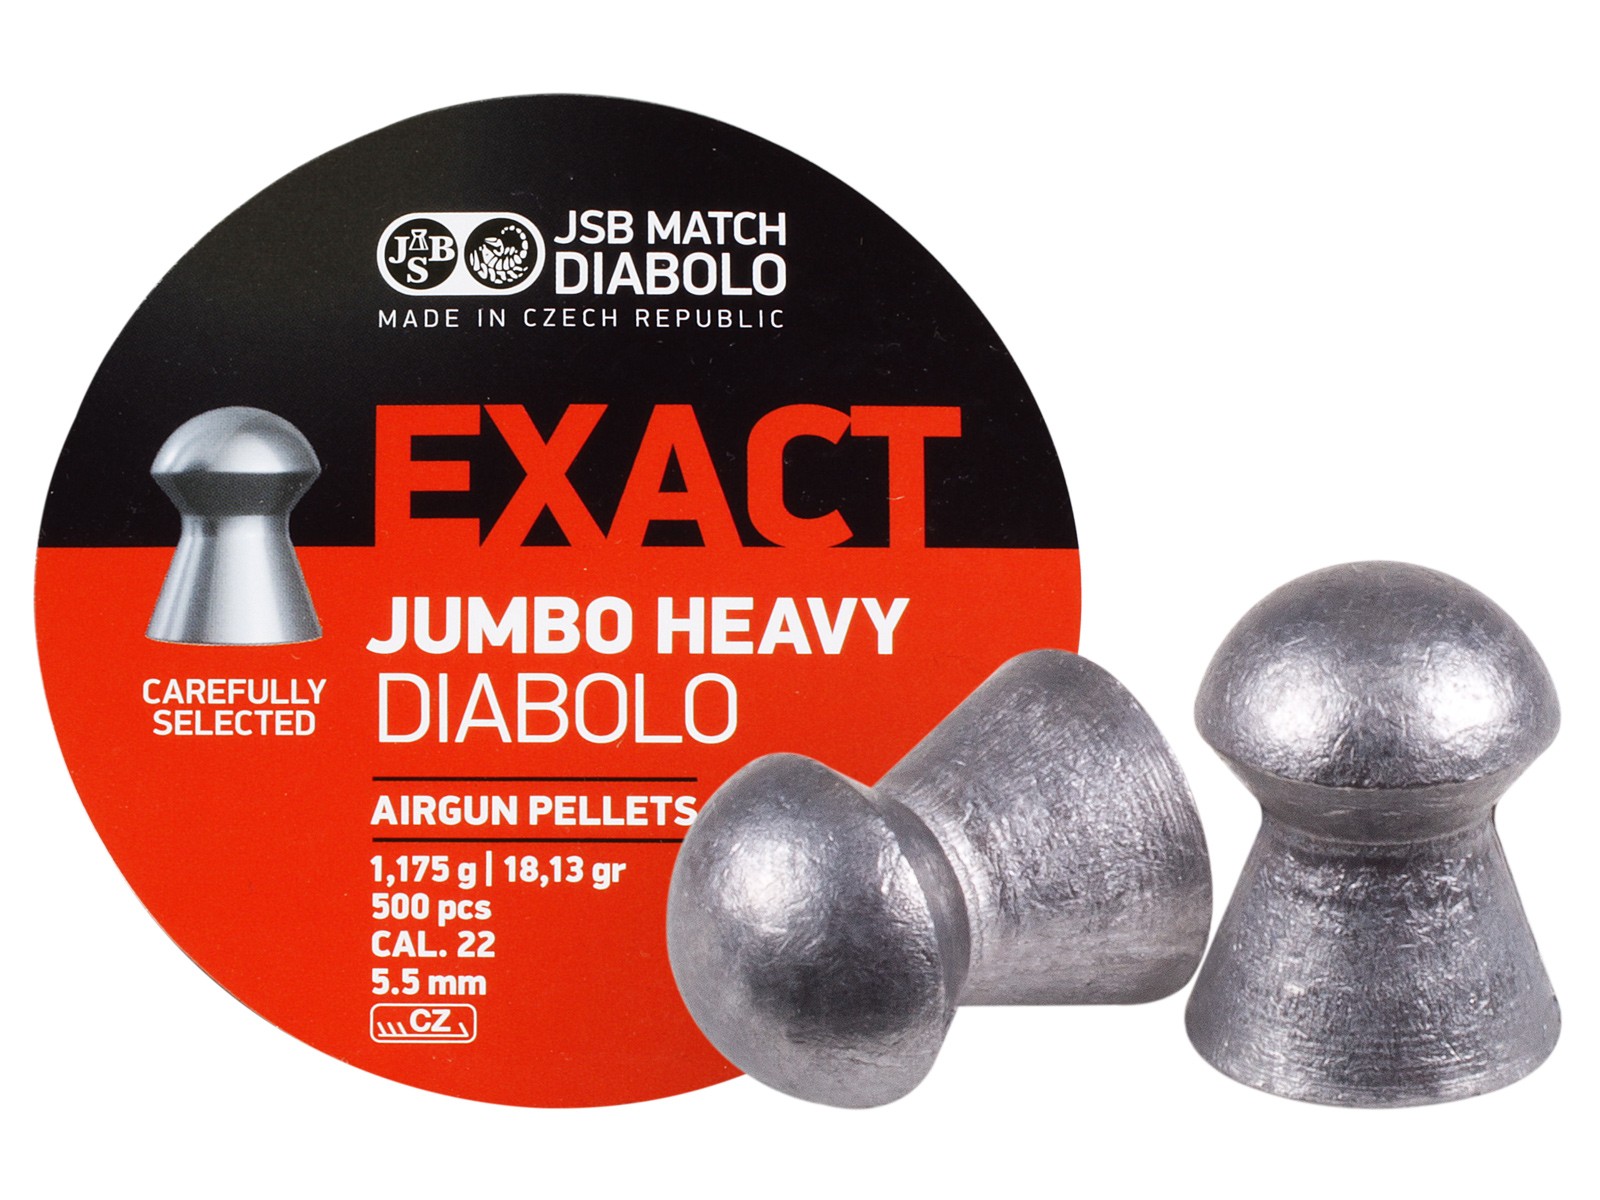 JSB Match Diabolo Exact Jumbo Heavy .22 Cal, 18.13 Grains, Domed, 500ct |  Pyramyd Air